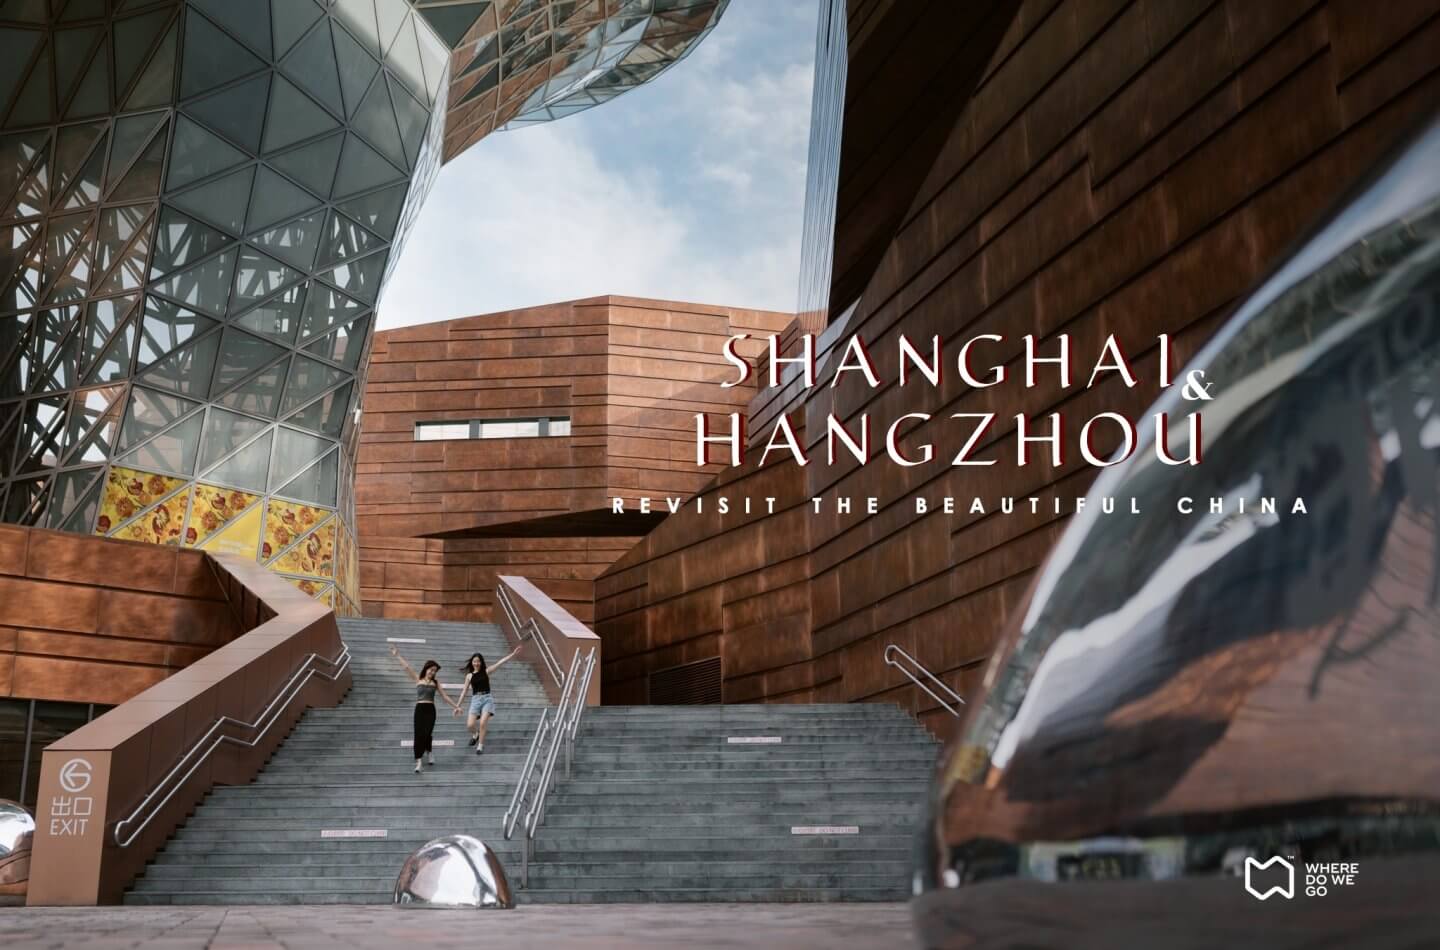 Shanghai & Hangzhou: Revisit The Beautiful China